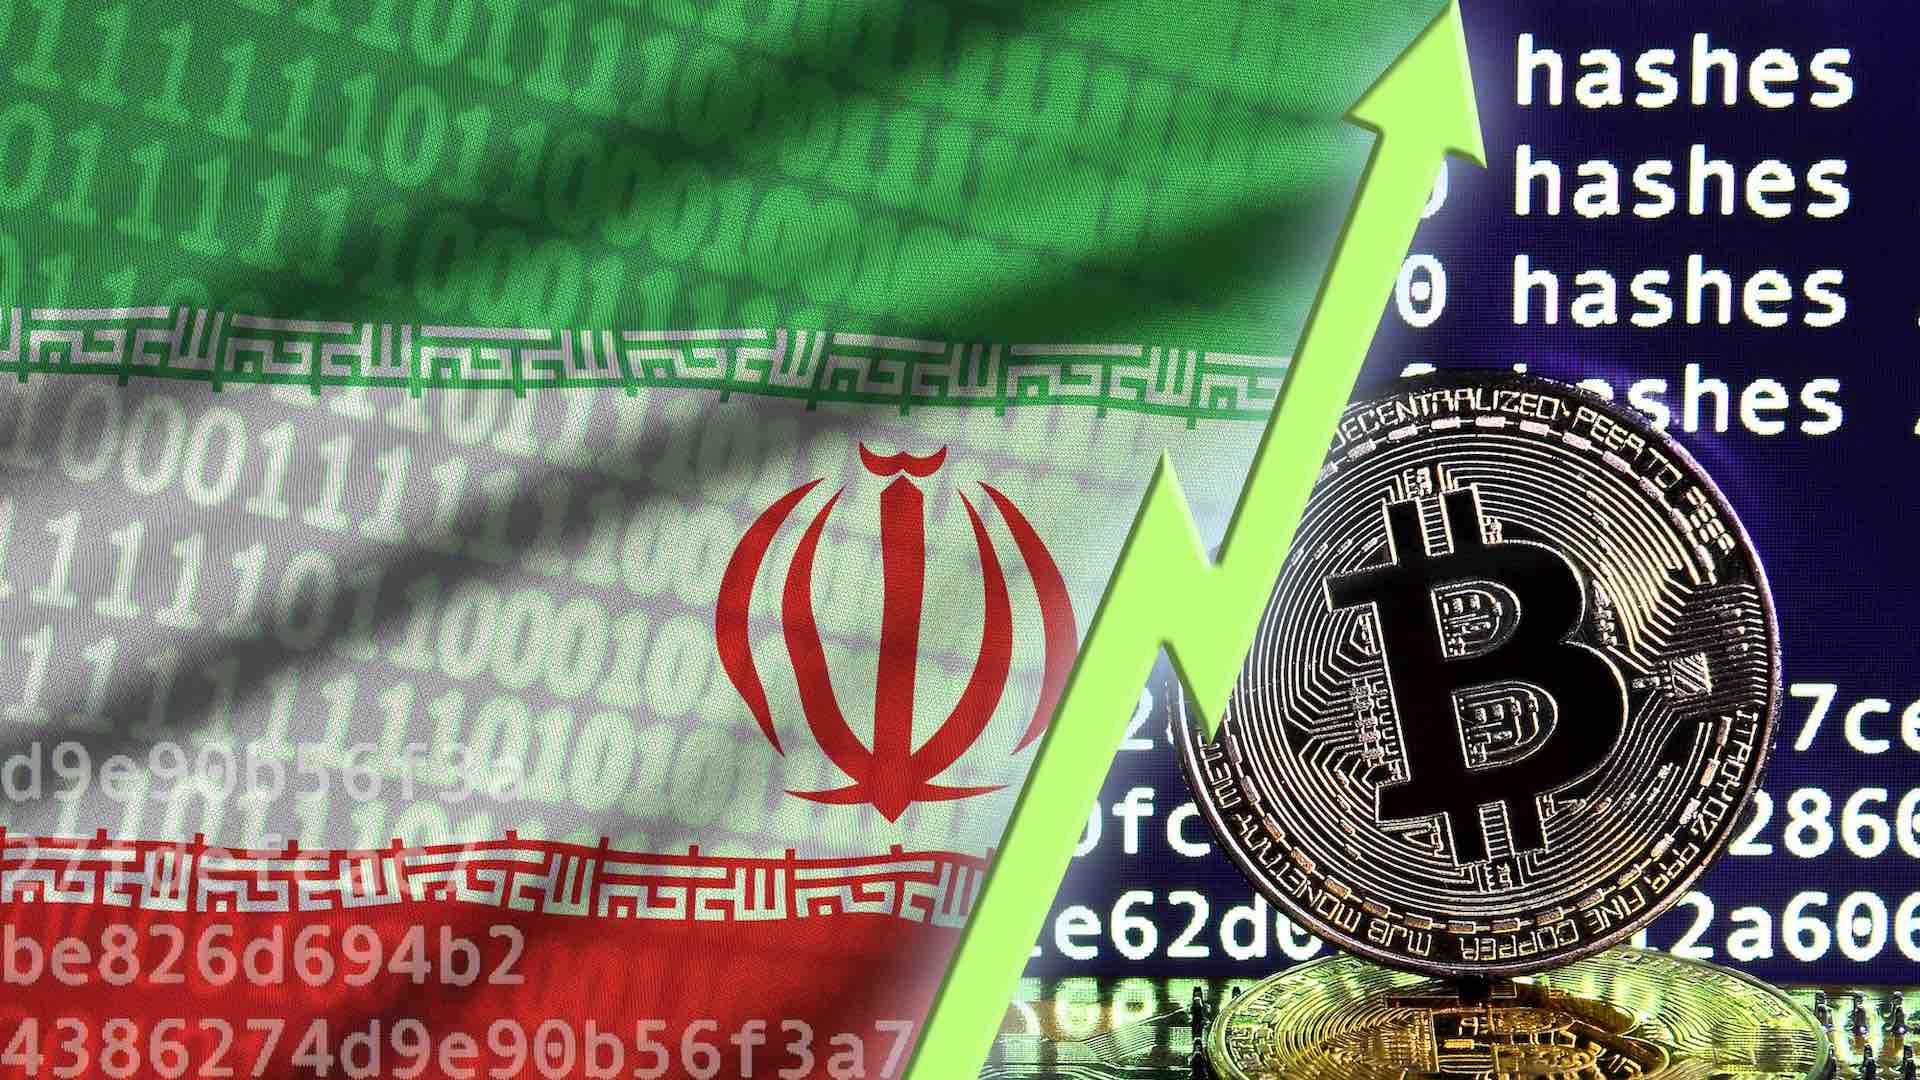 U.S. senators push for action against Iran's crypto mining activities